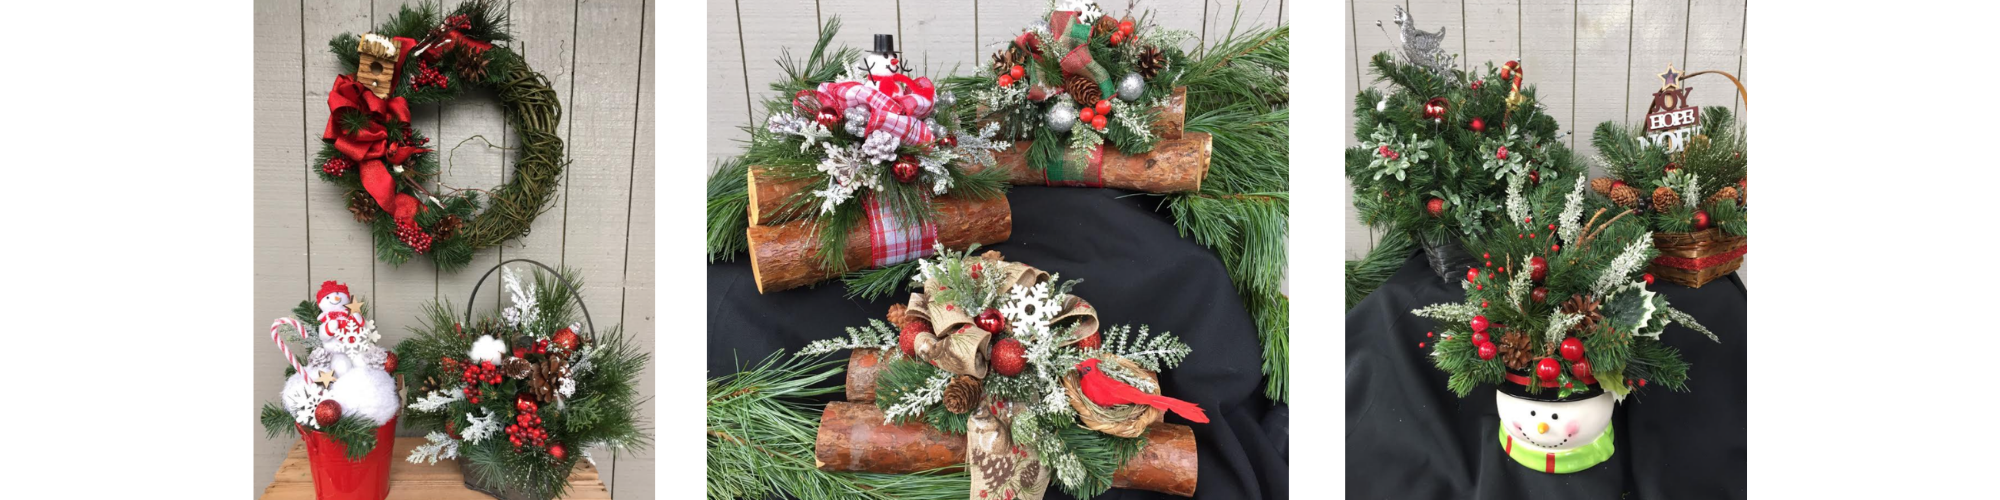 christmas evergreens & wreaths